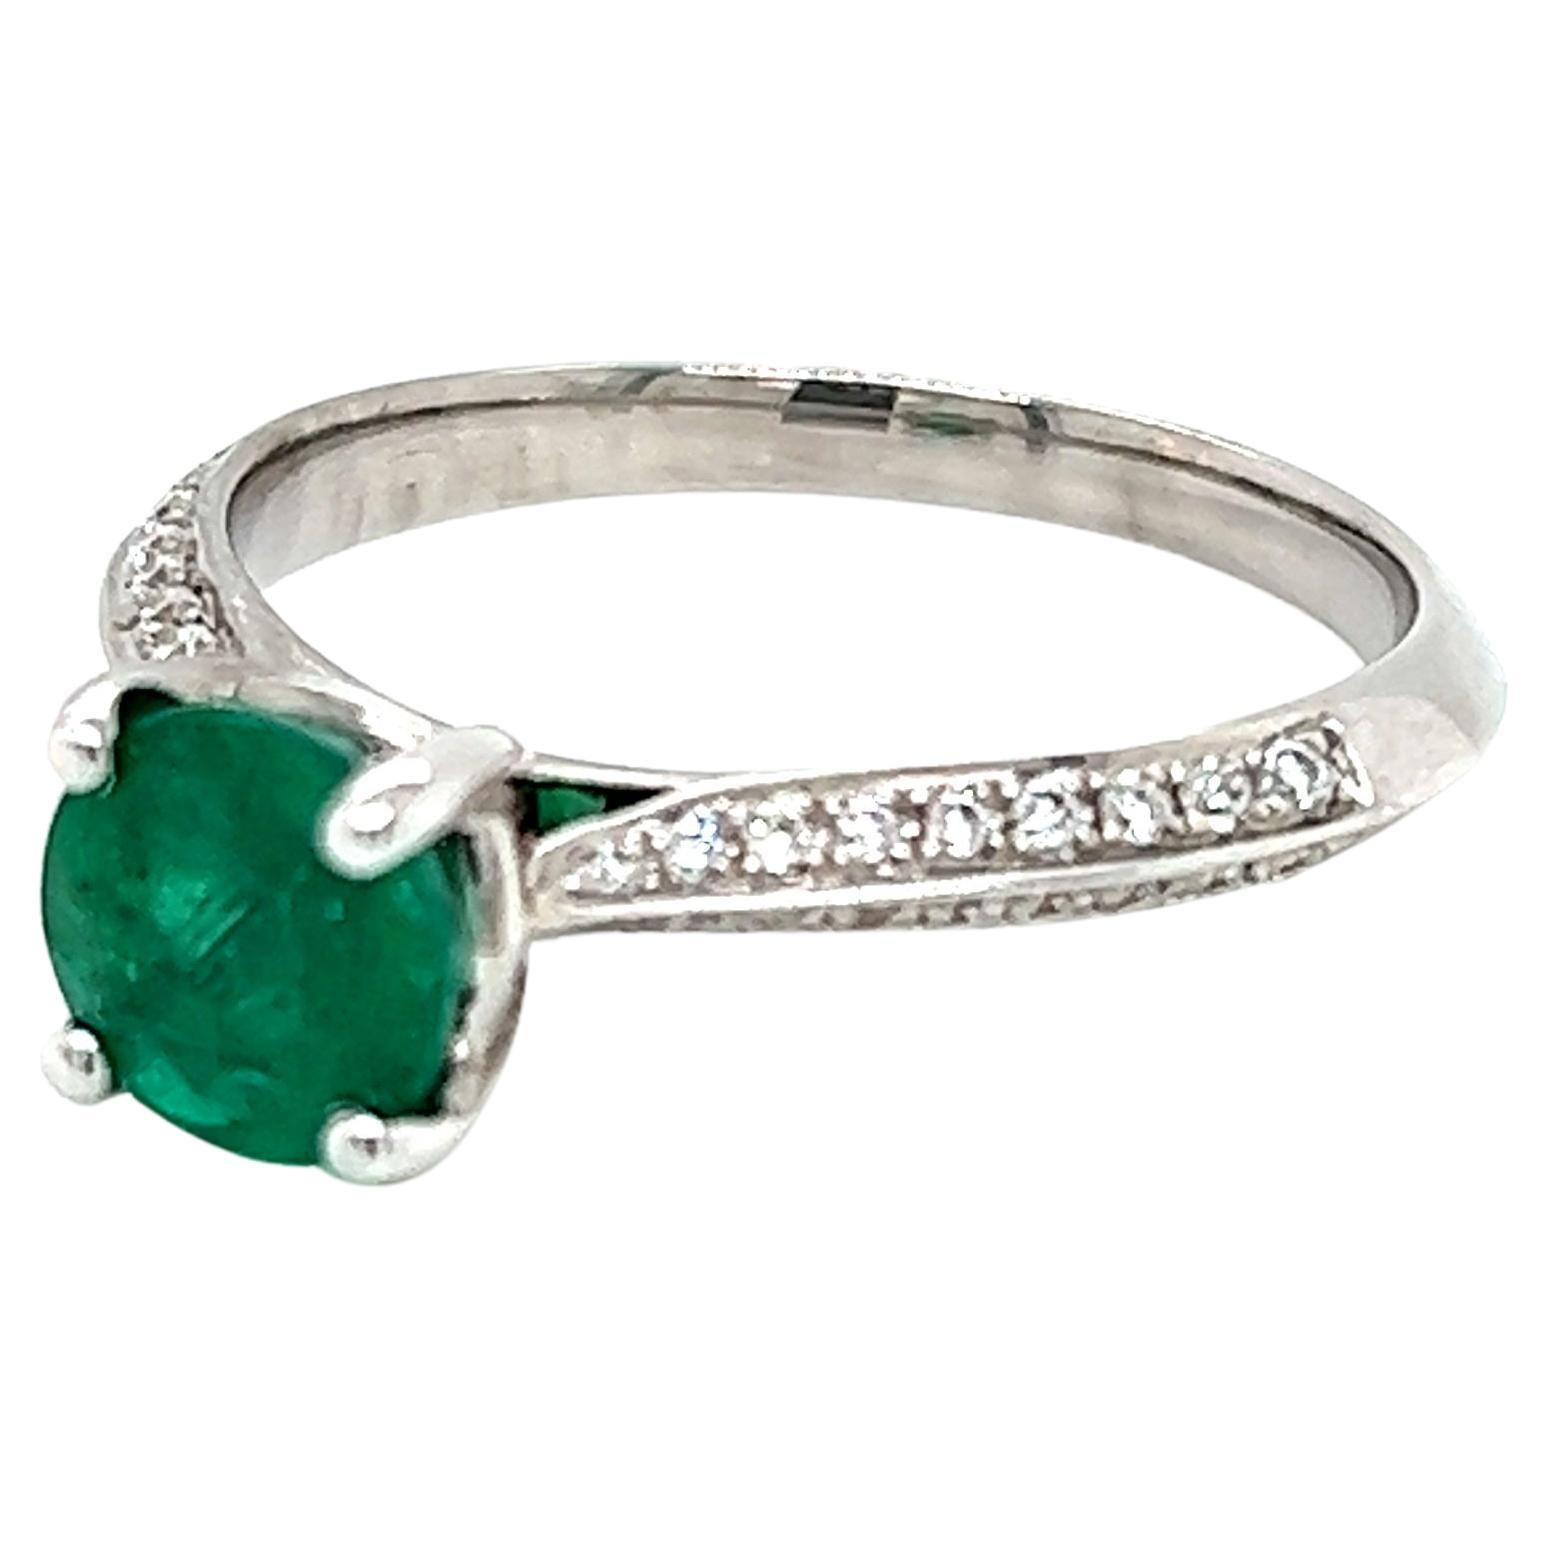 1.1 Carat Round Brilliant Emerald and Diamond Ring in 18 Karat White Gold